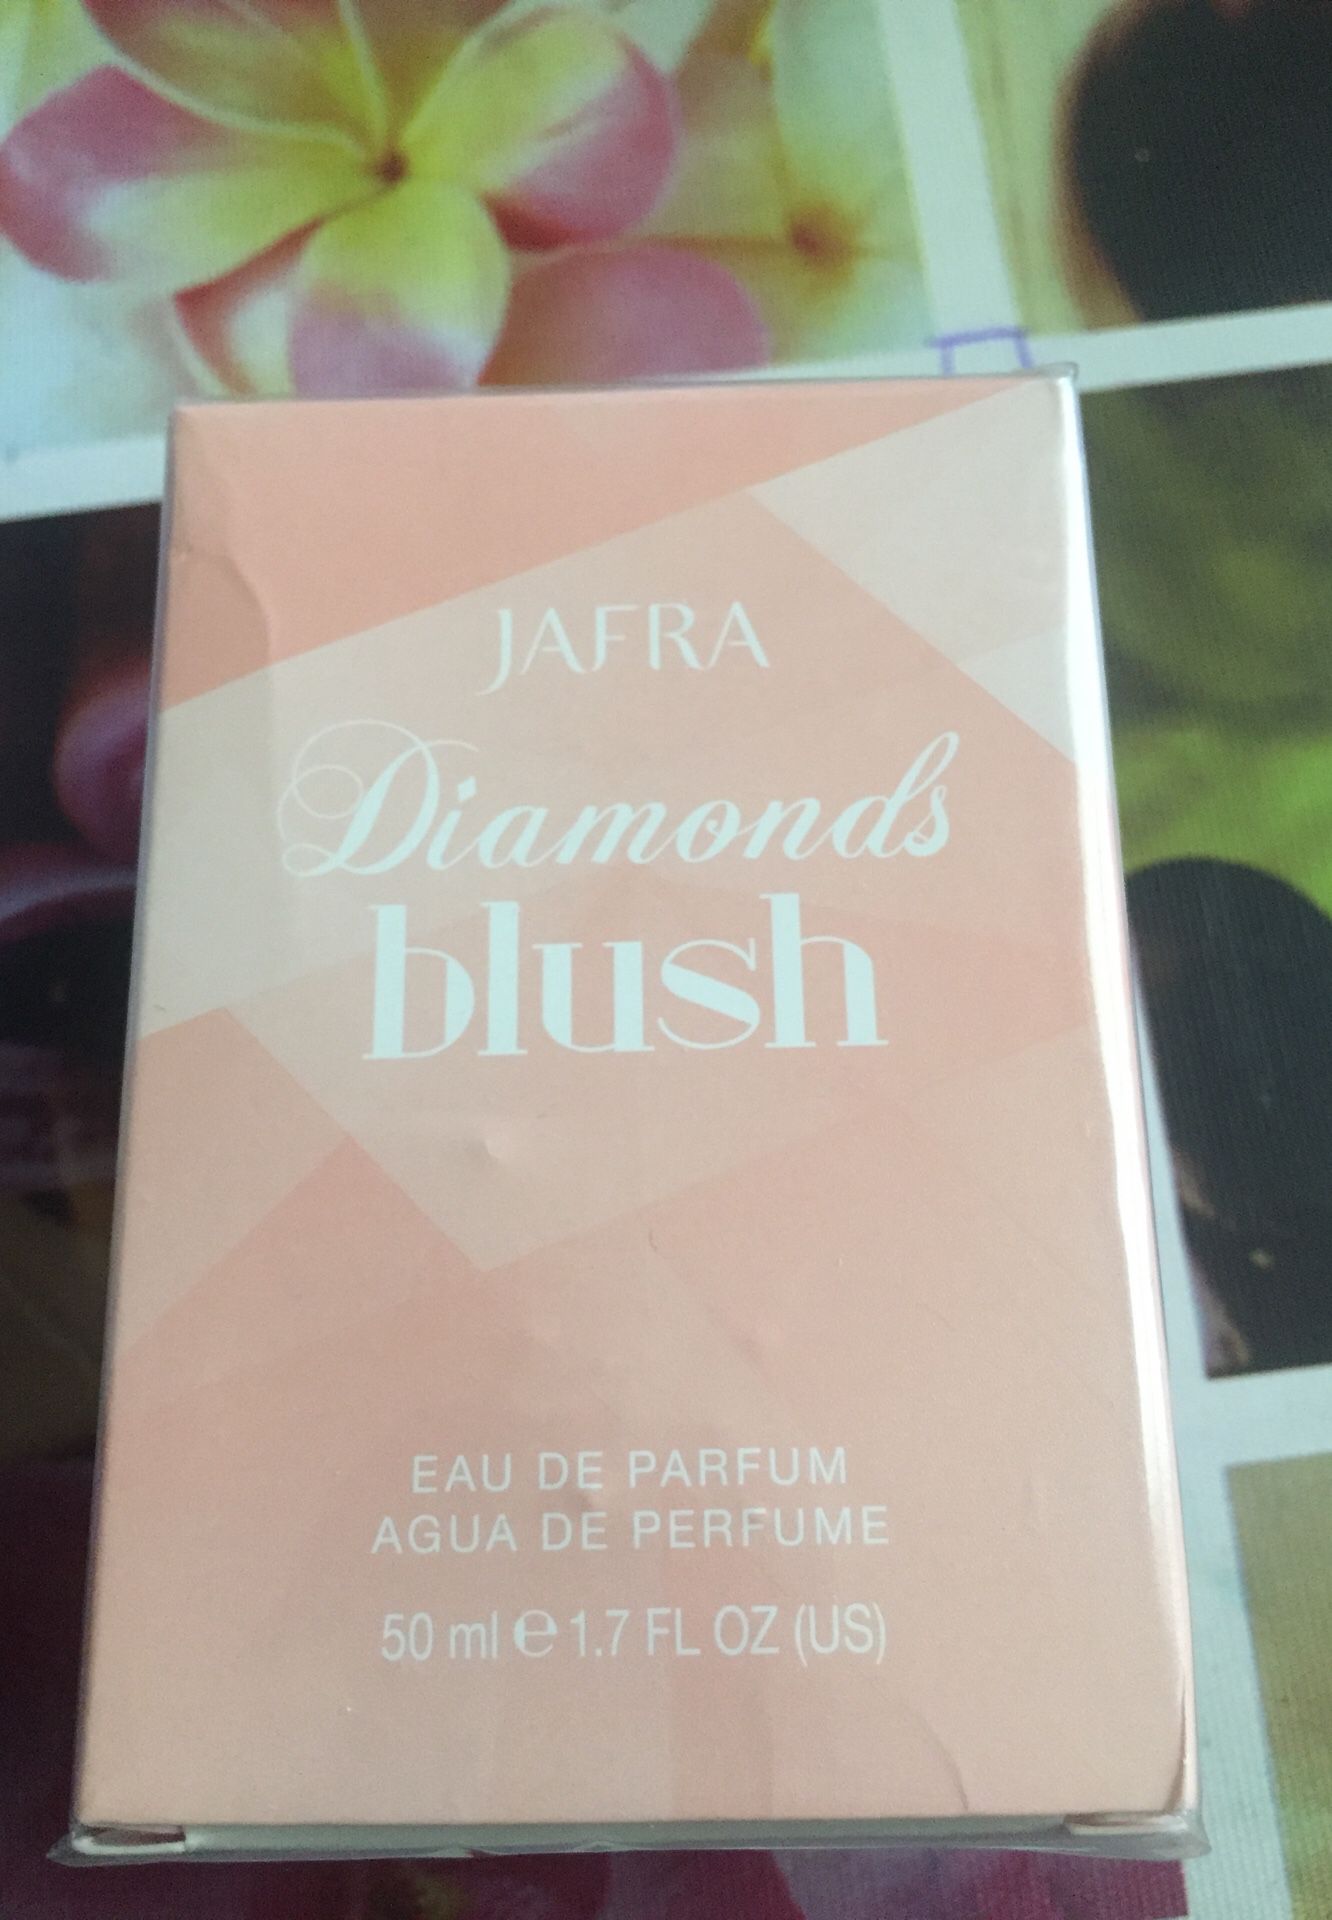 Diamond Blush (Jafra)